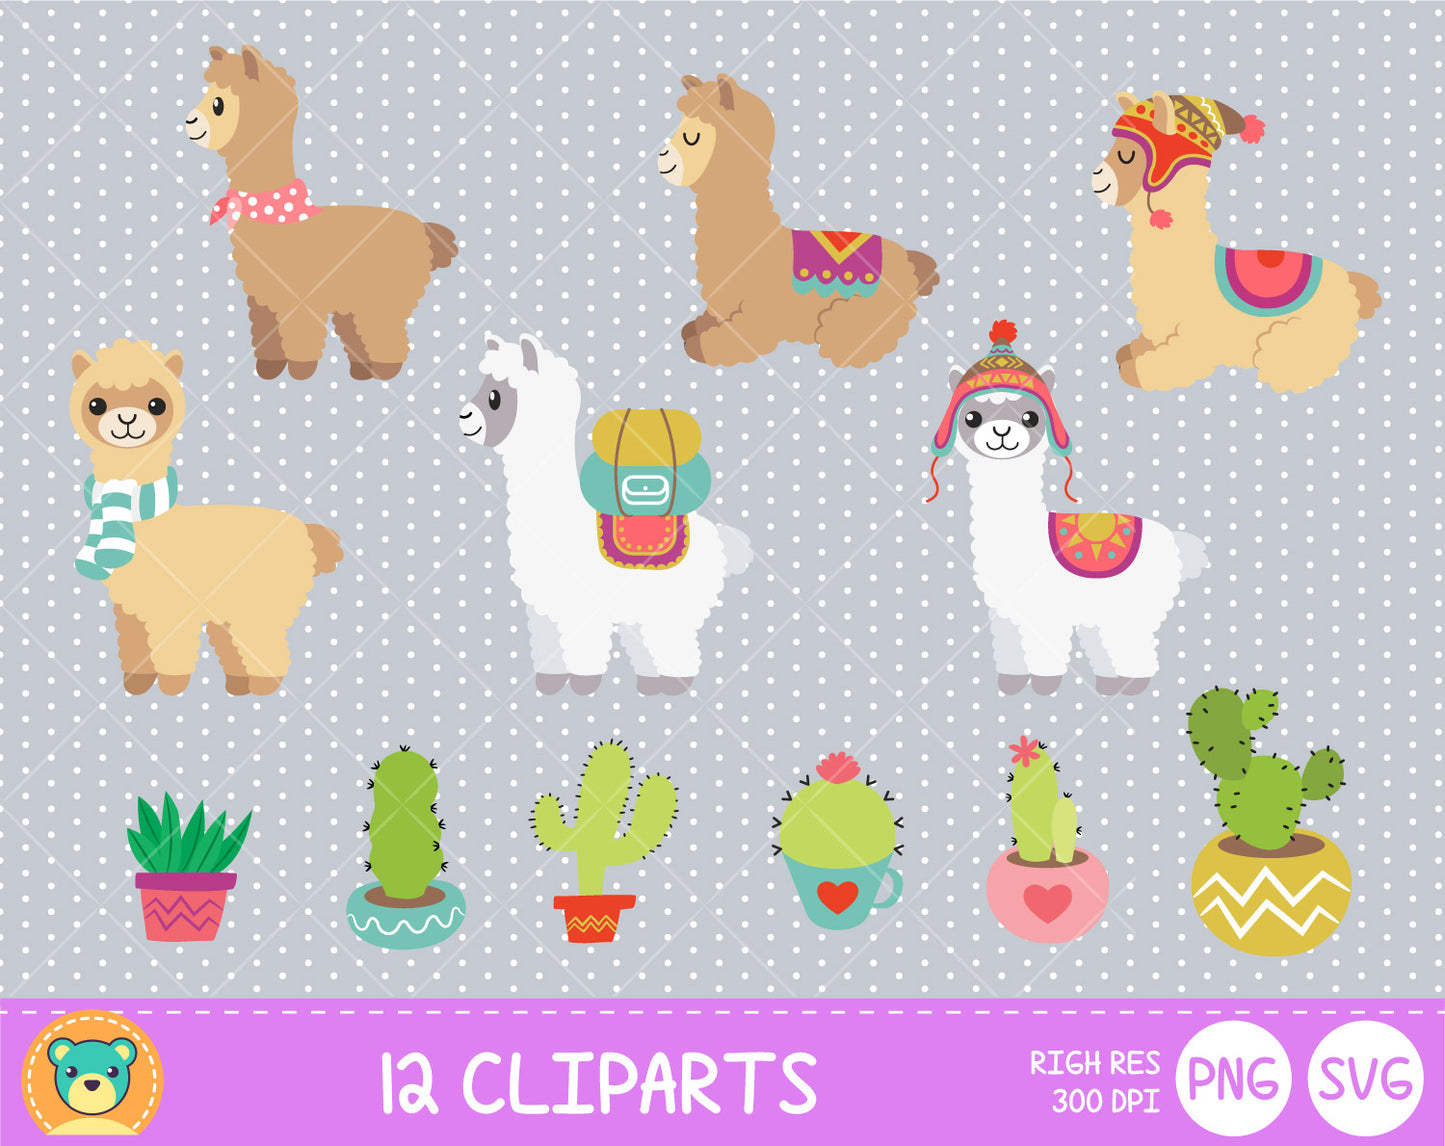 Alpaca and Cactus clipart set, Digital clip art for decoration, scrapbooking, PNG, SVG, instant download